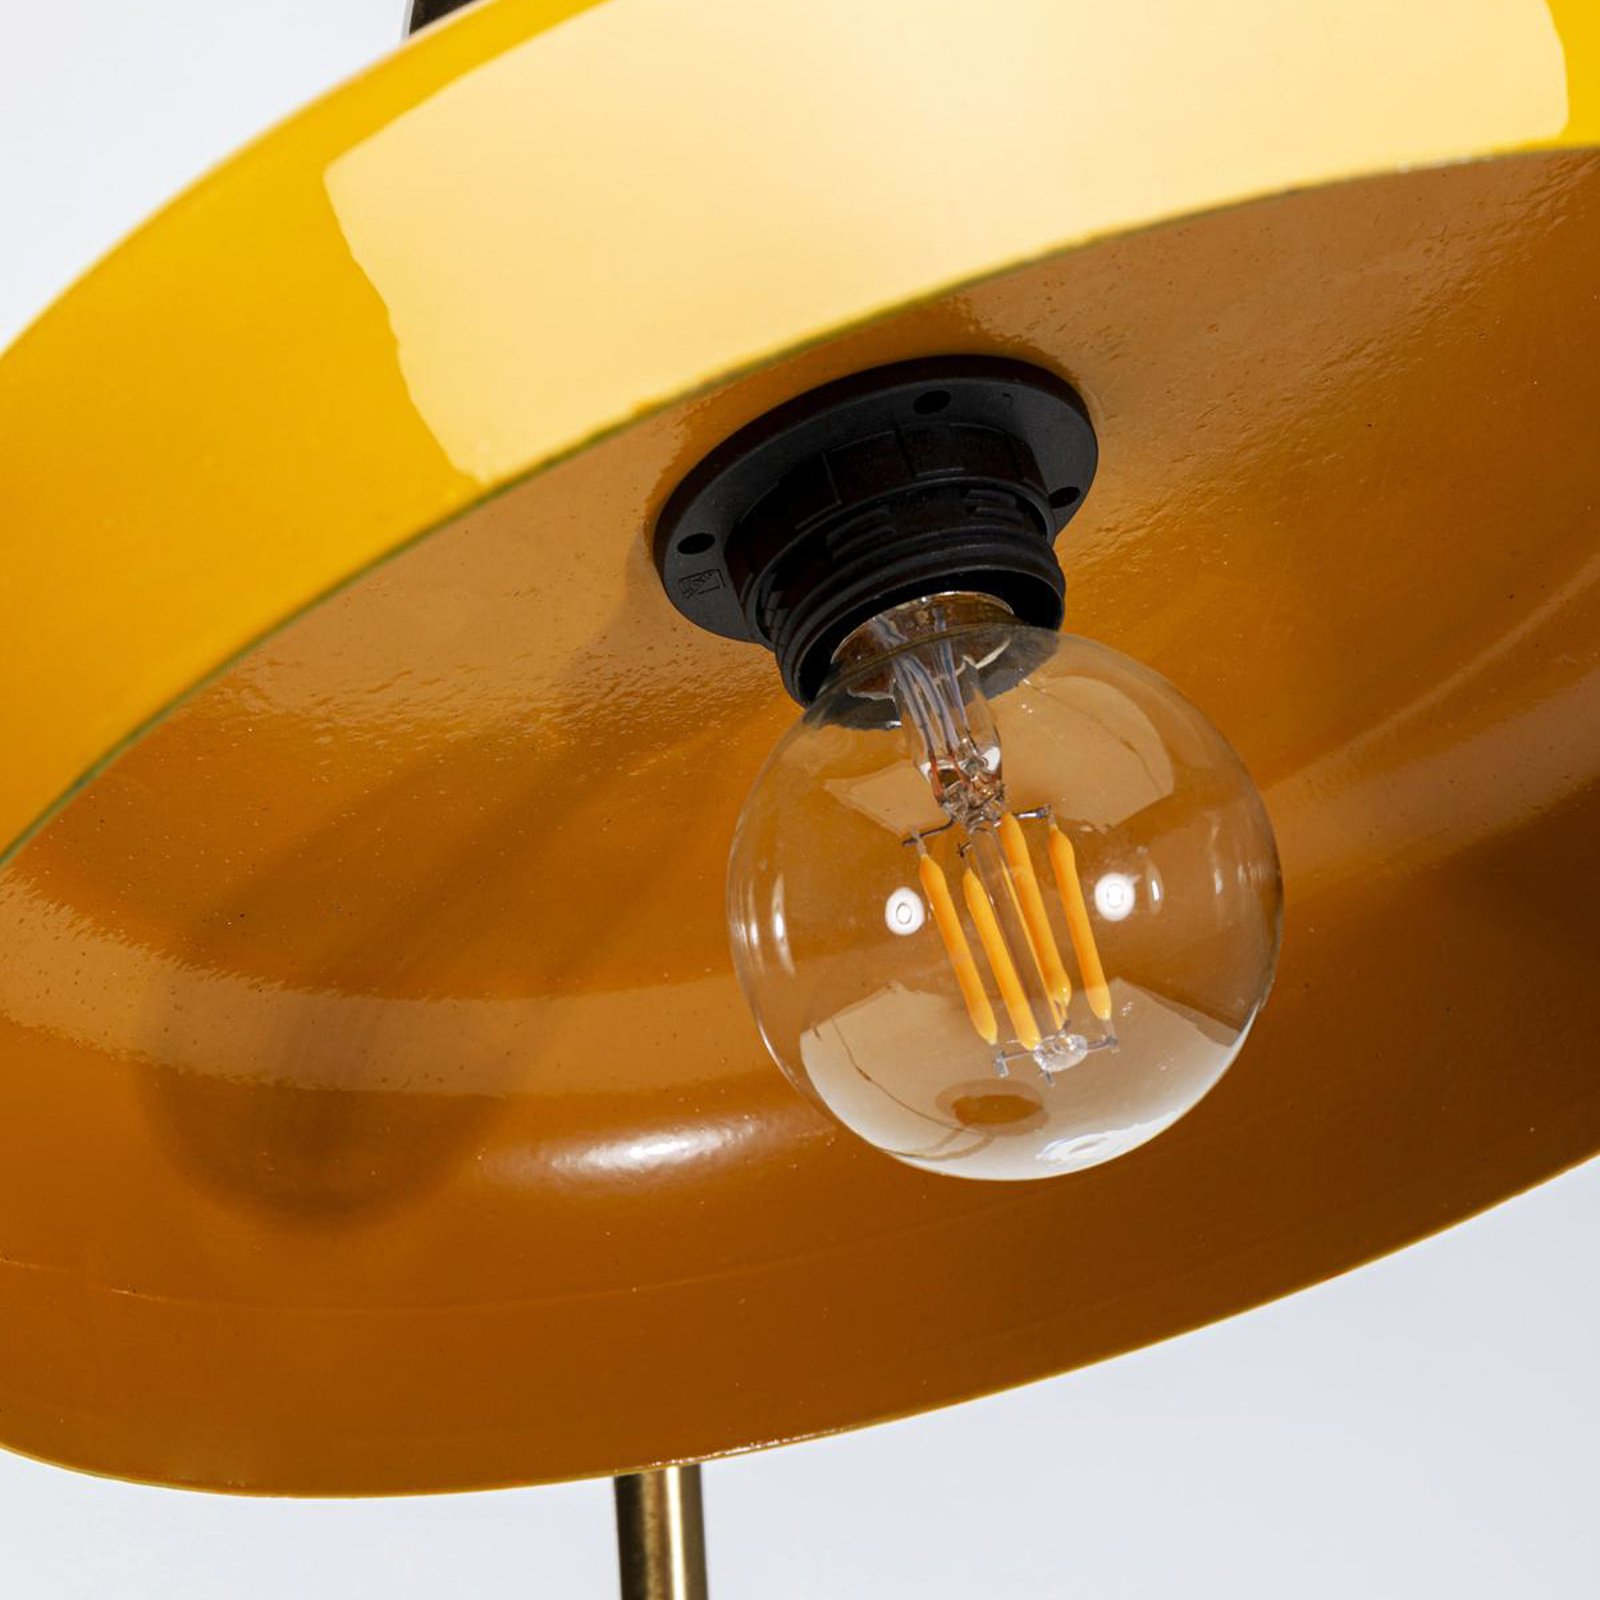 KARE Demi bordslampa, gul, stål, höjd 56 cm